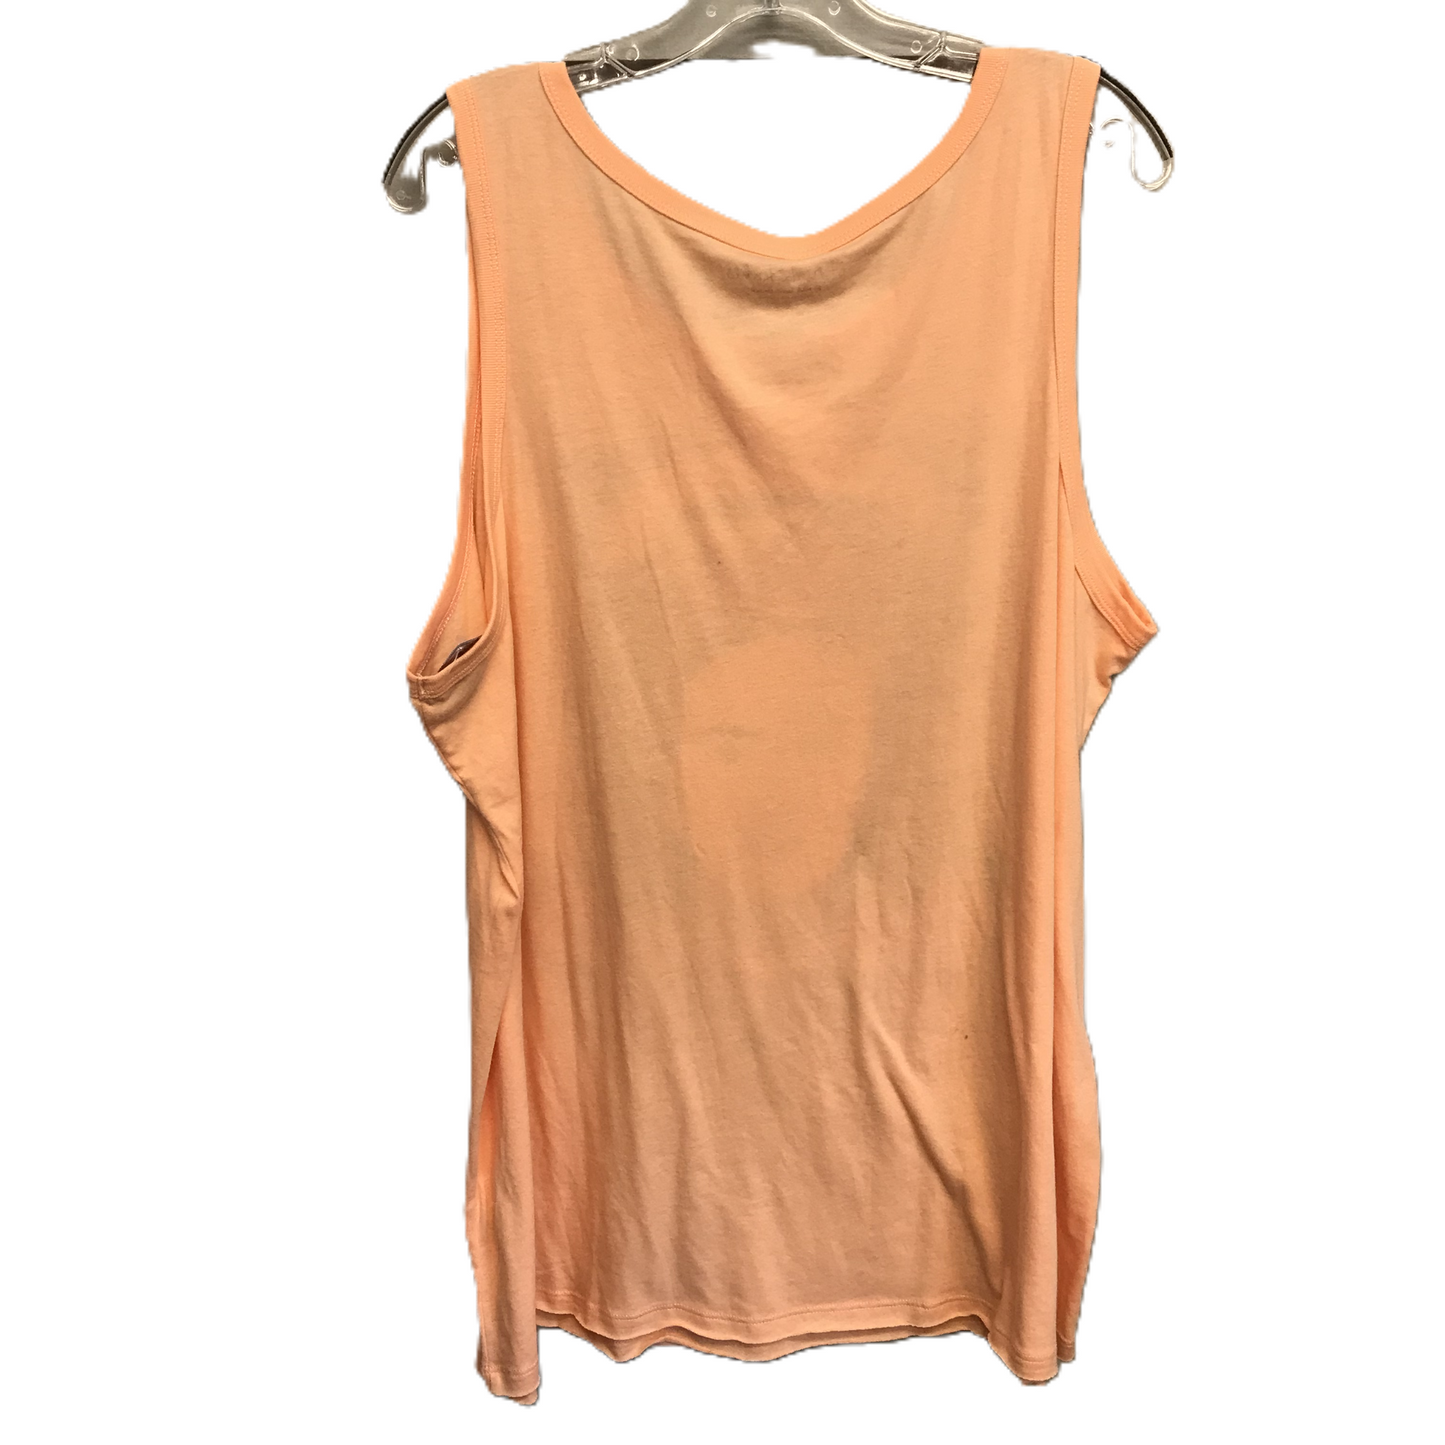 Orange Top Sleeveless By Torrid, Size: 3x